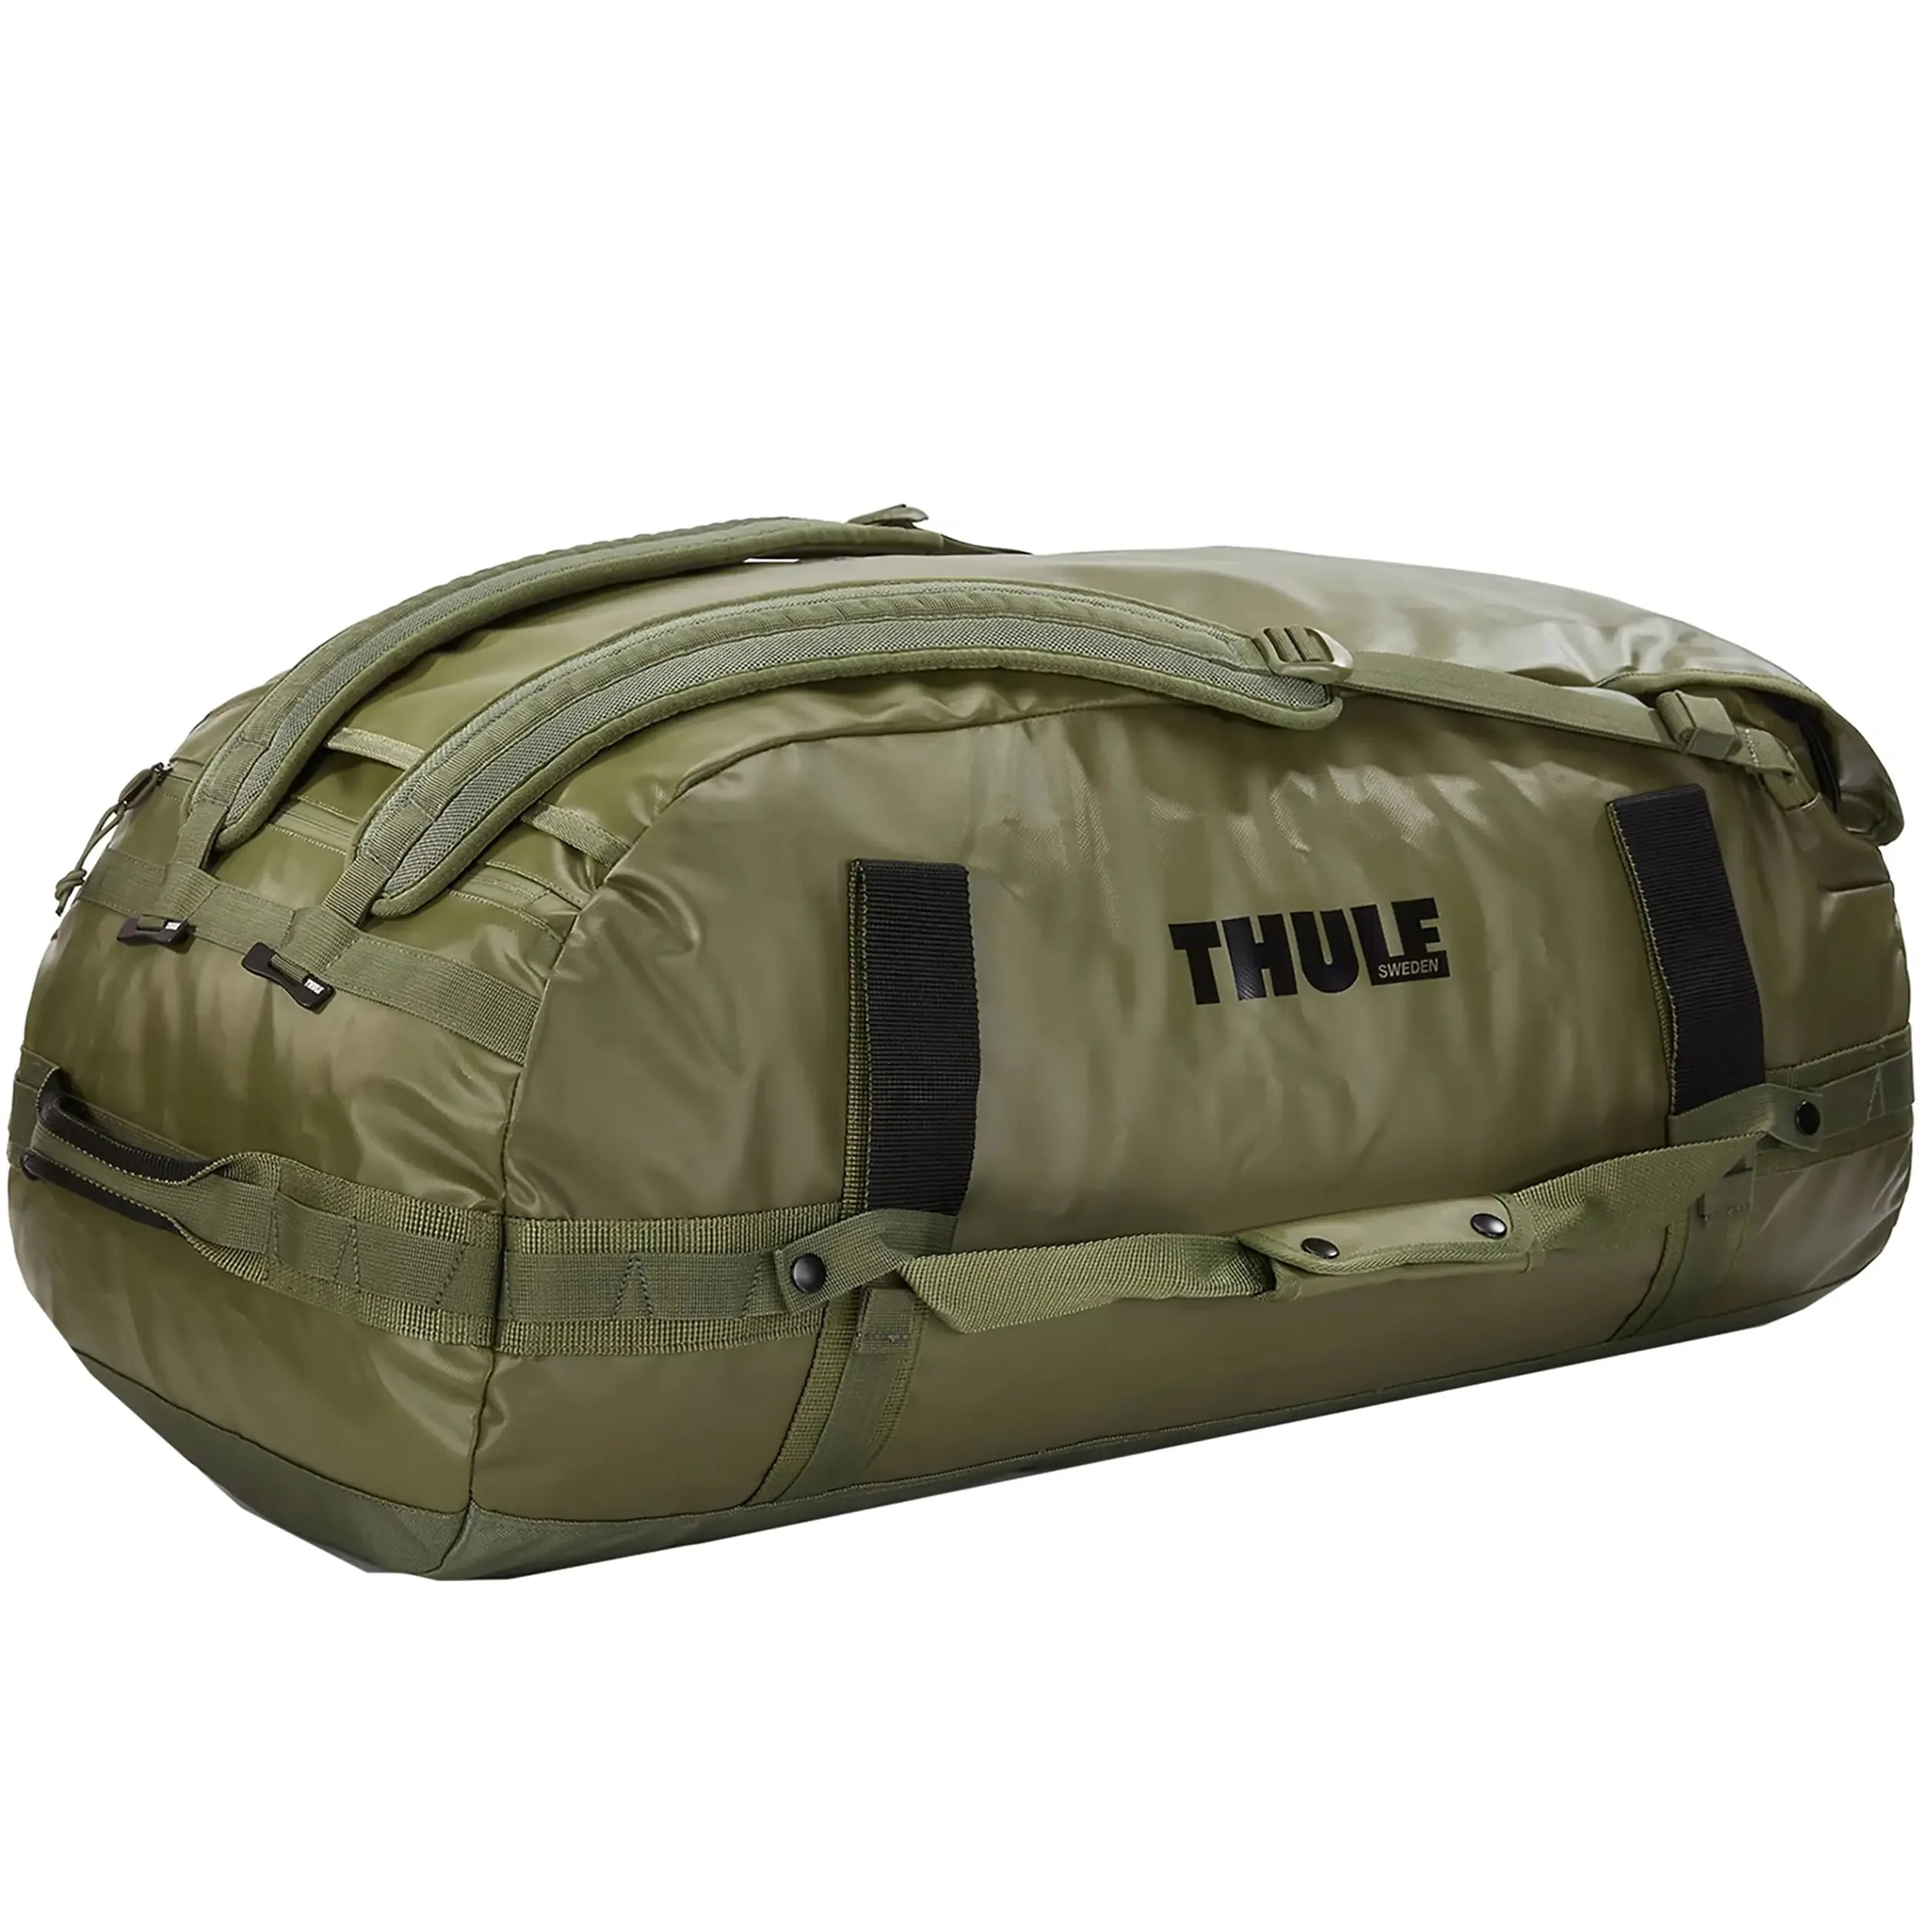 Thule Travel Chasm Travel Bag 86 cm - Black